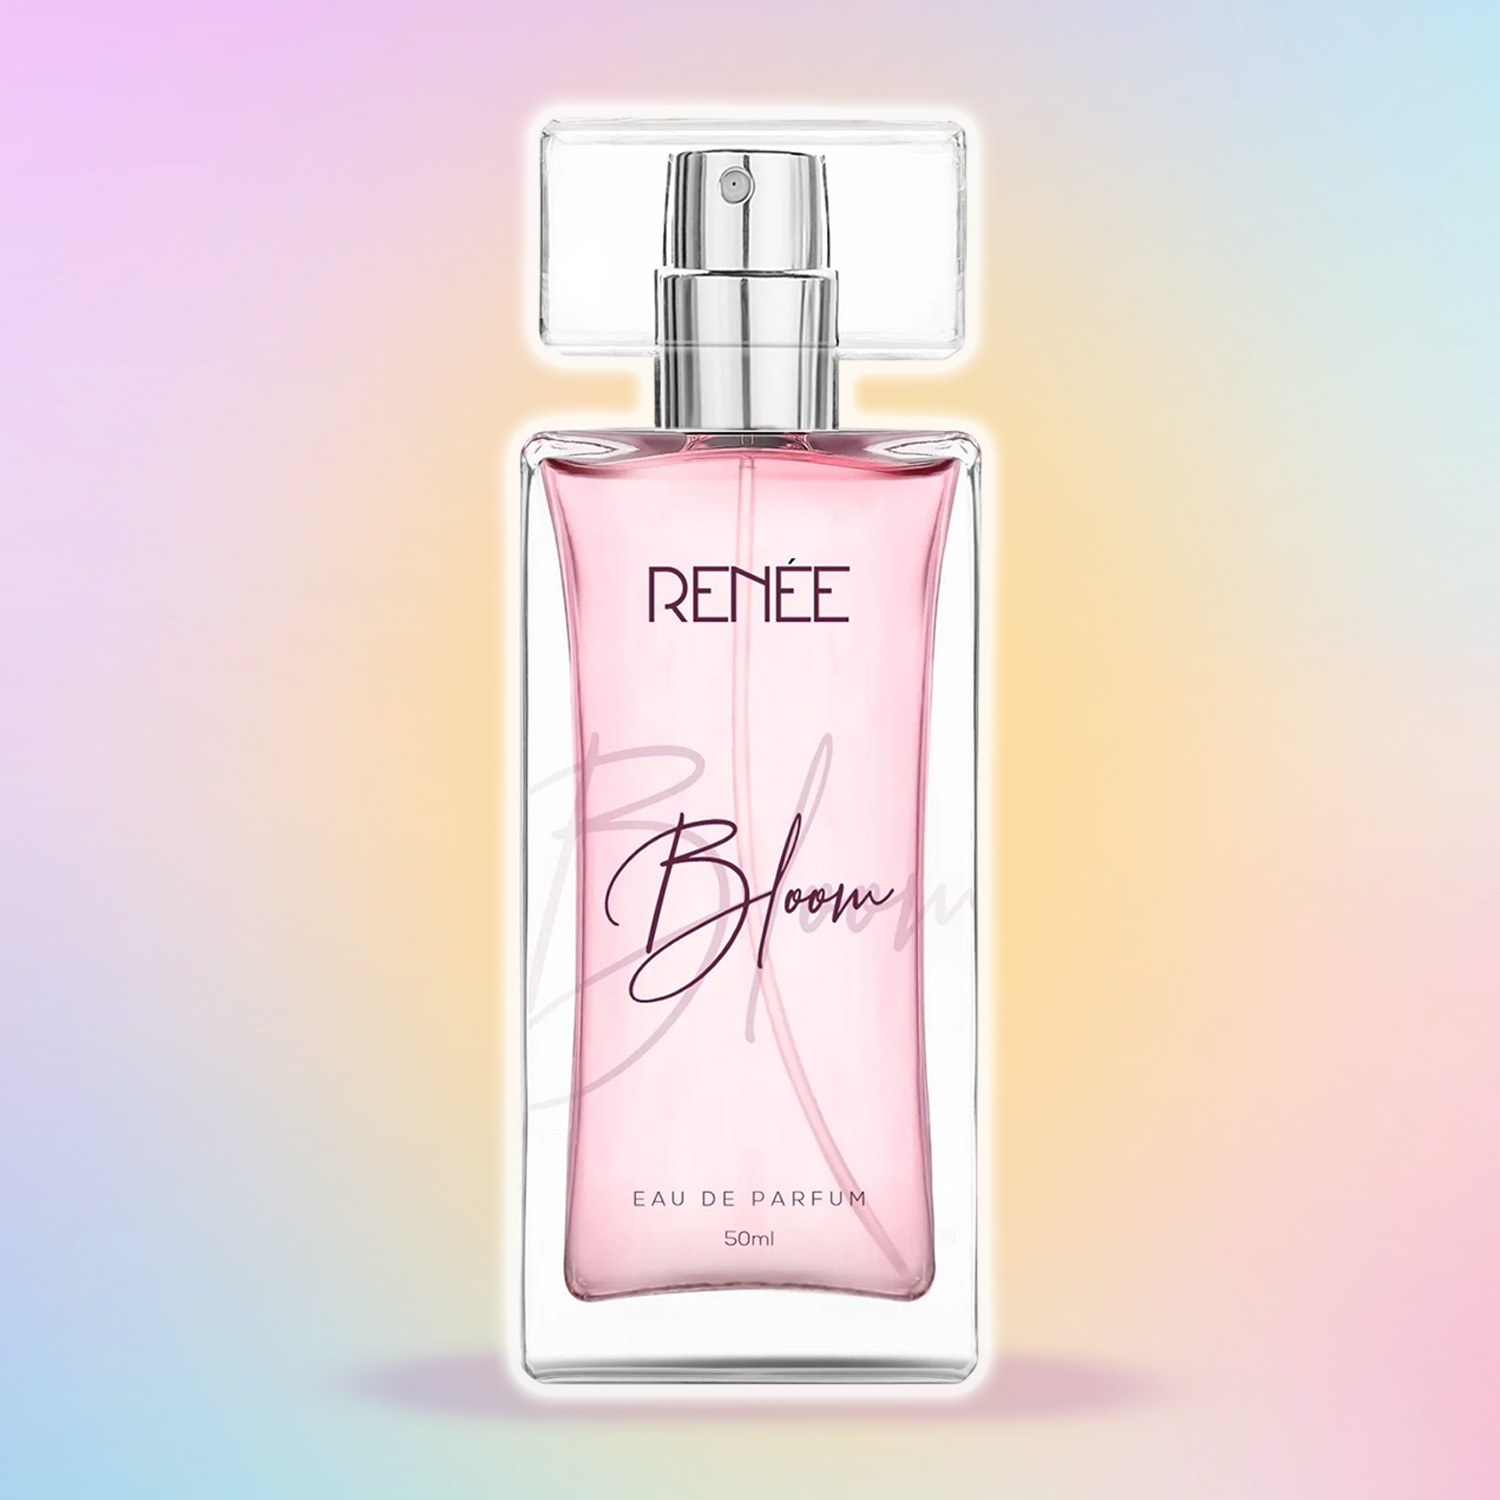 For Woman Bi-es perfume - a fragrance for women